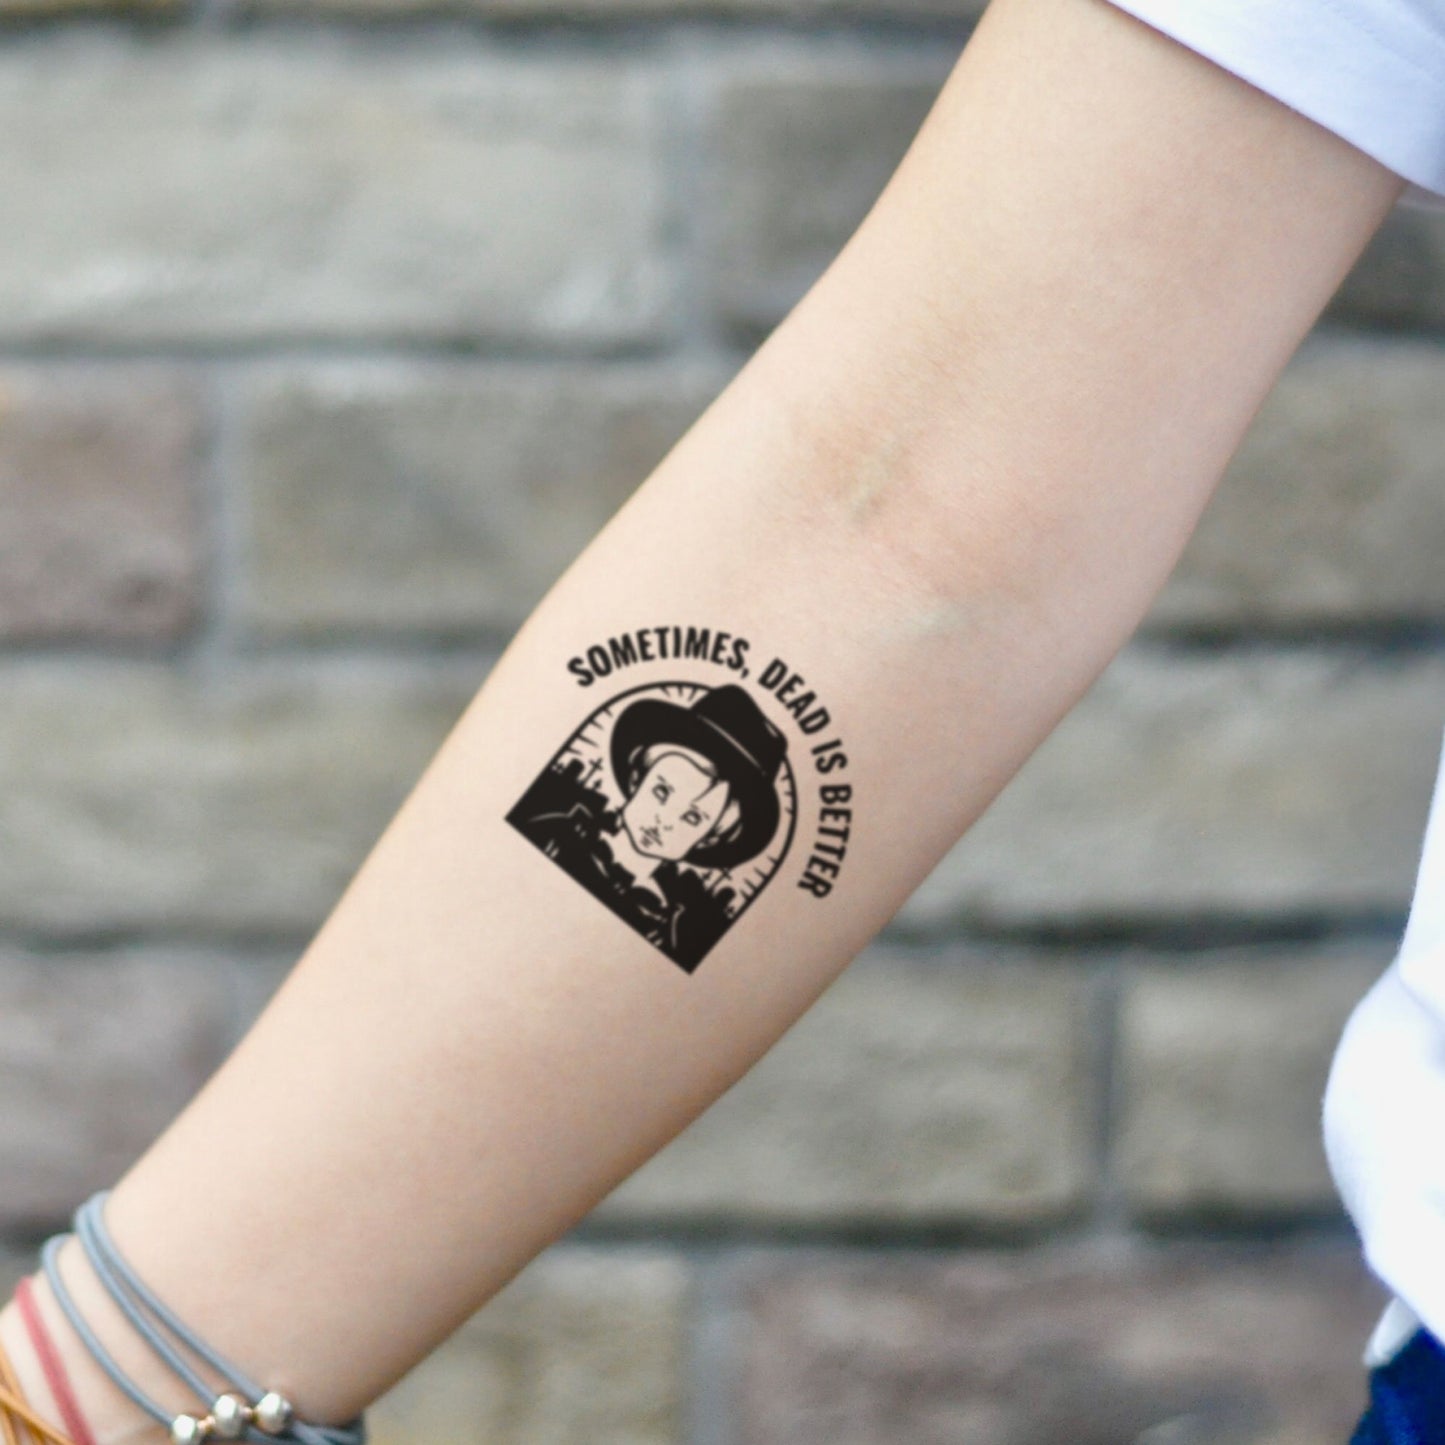 fake small pet sematary illustrative temporary tattoo sticker design idea on inner arm